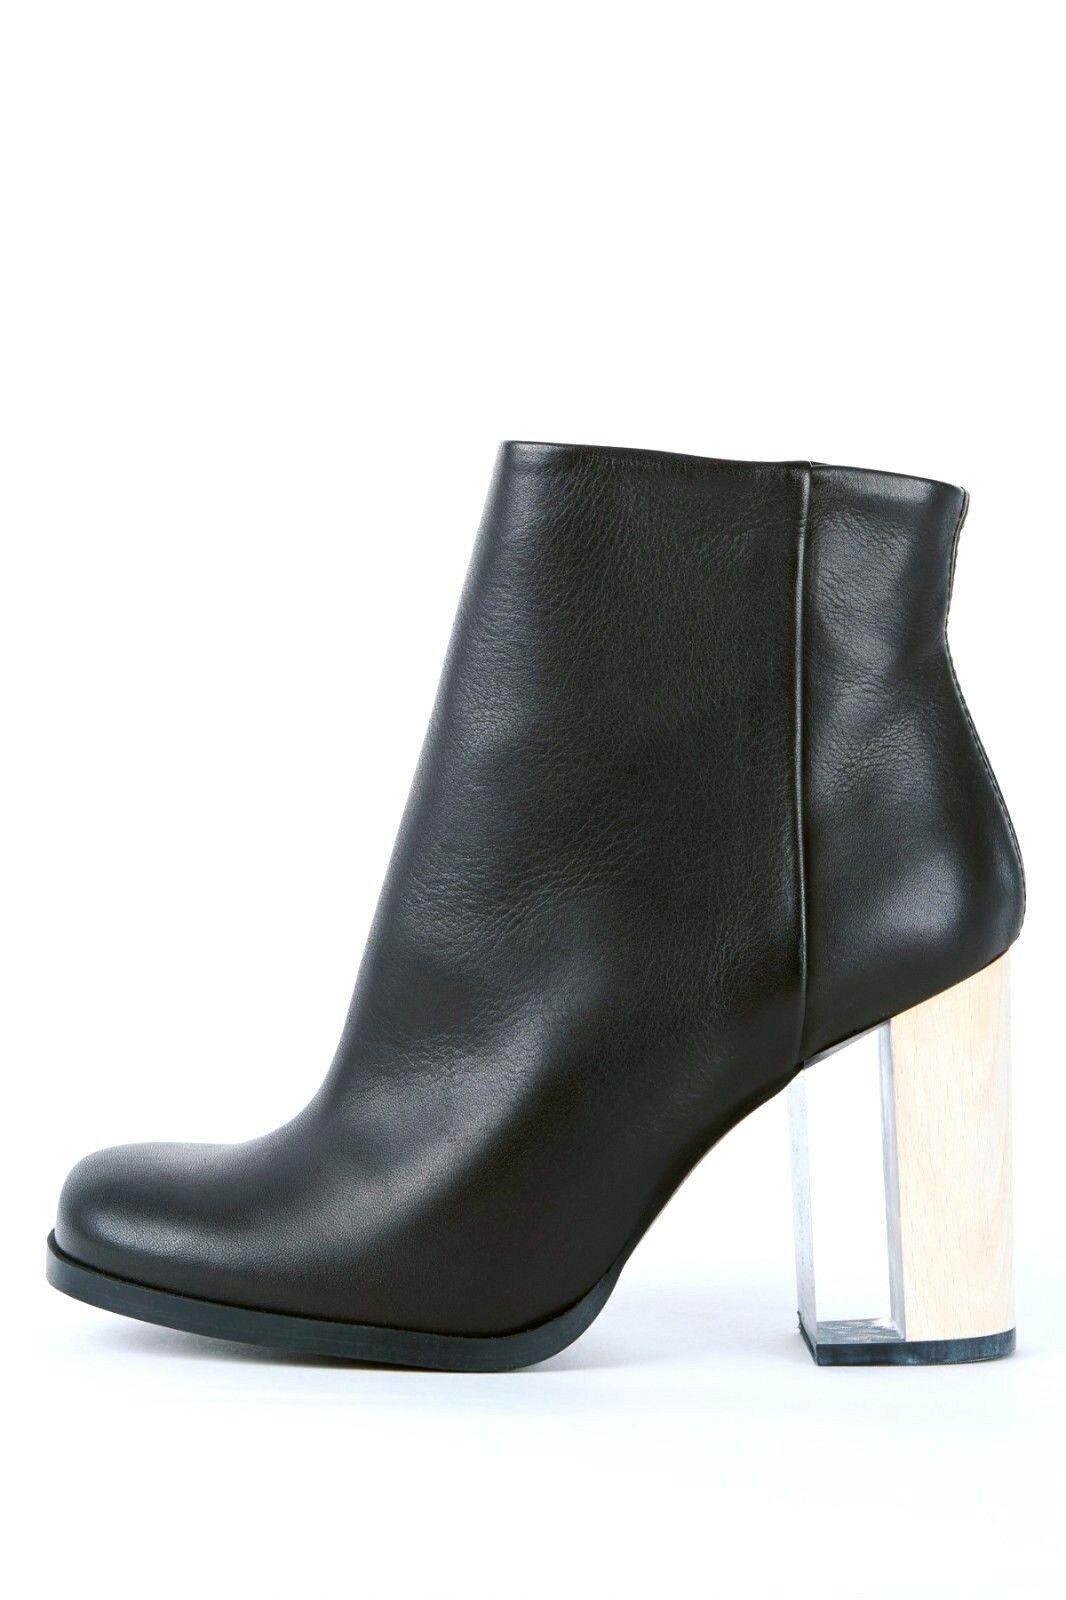 Miista Ali Black Boots Leather Wood & Clear Heel Boot Size 9.5/40